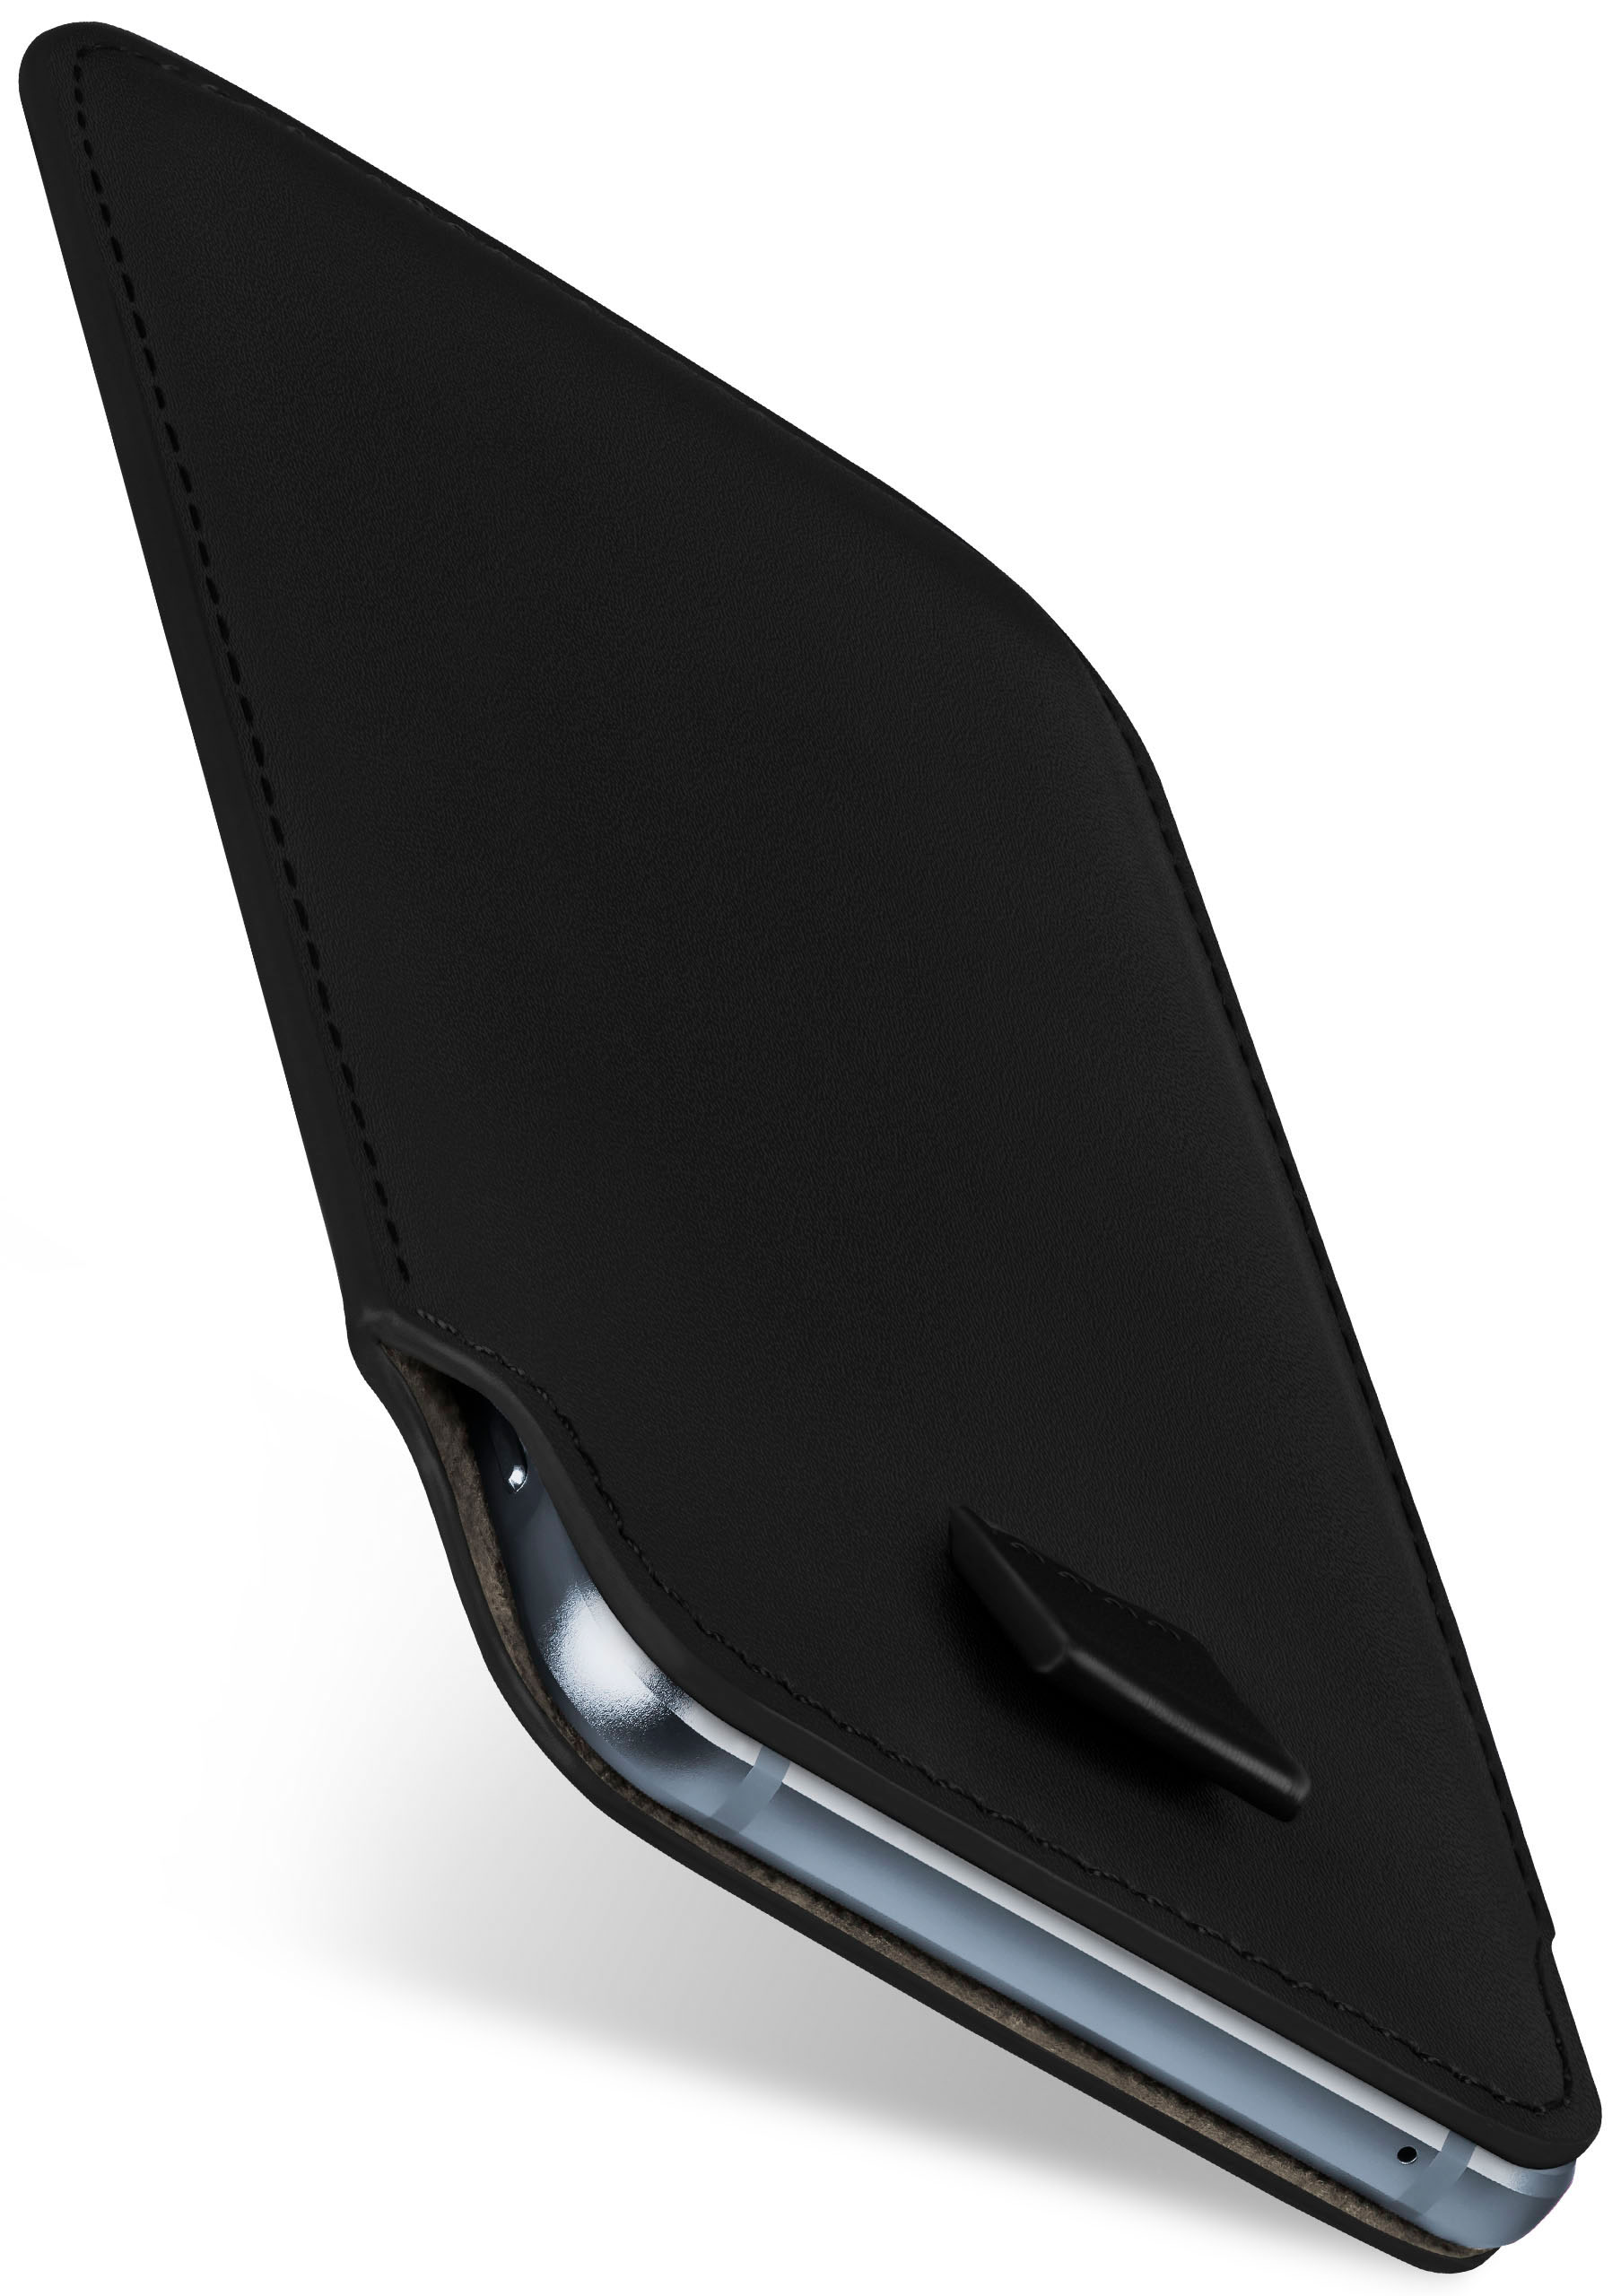 MOEX Slide Cubot, Deep-Black X30, Cover, Full Case